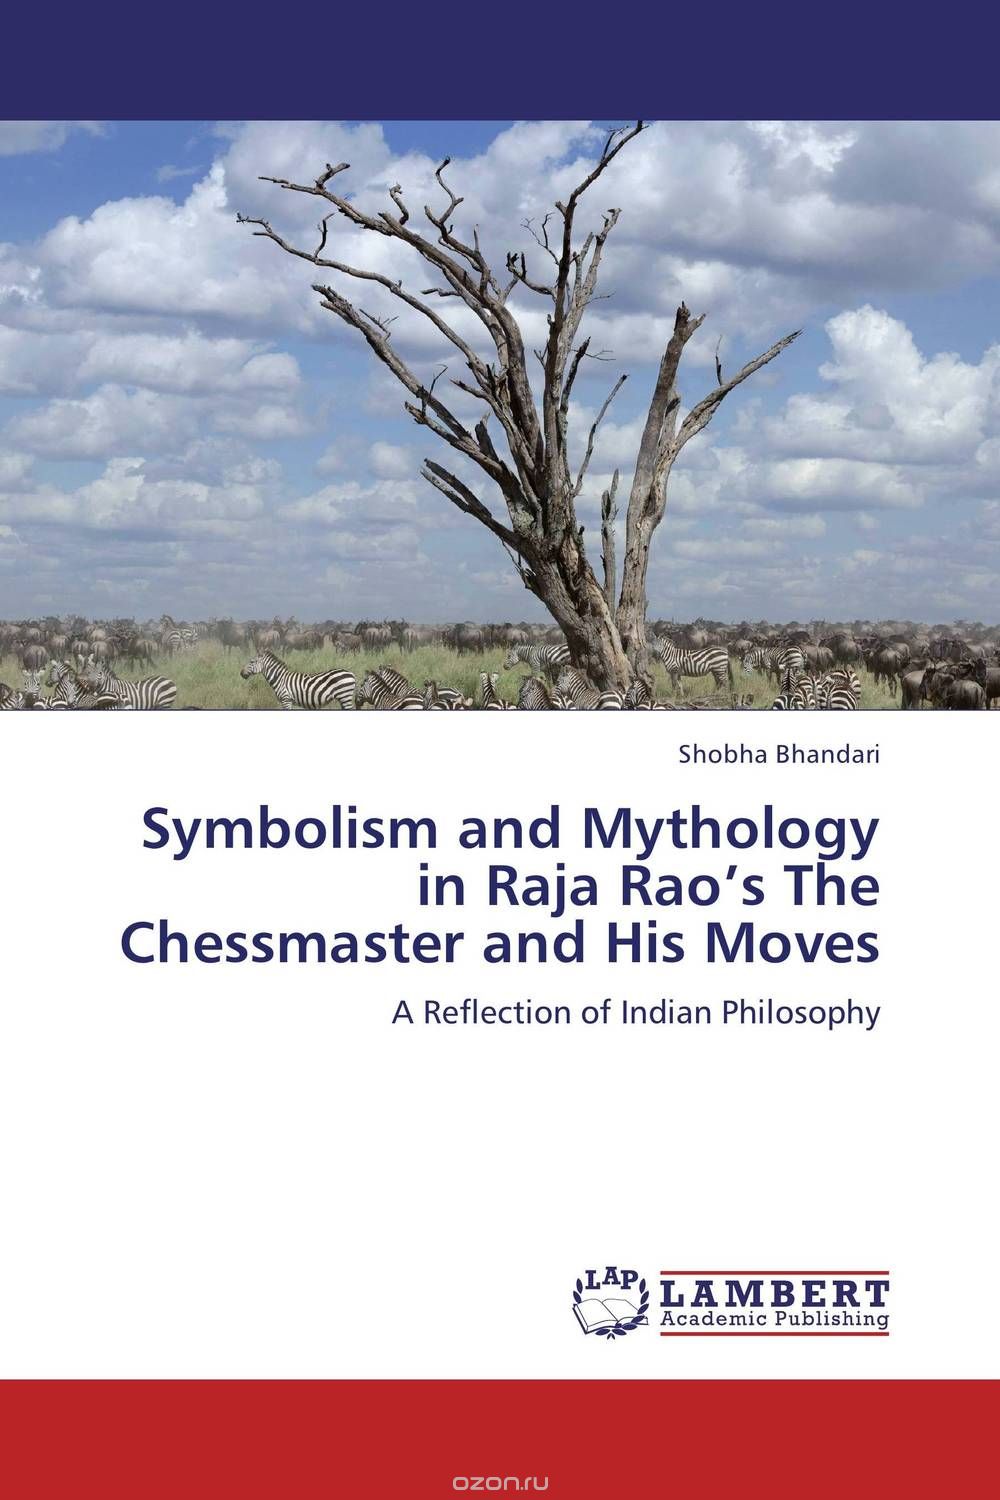 Скачать книгу "Symbolism and Mythology in Raja Rao’s The Chessmaster and His Moves"